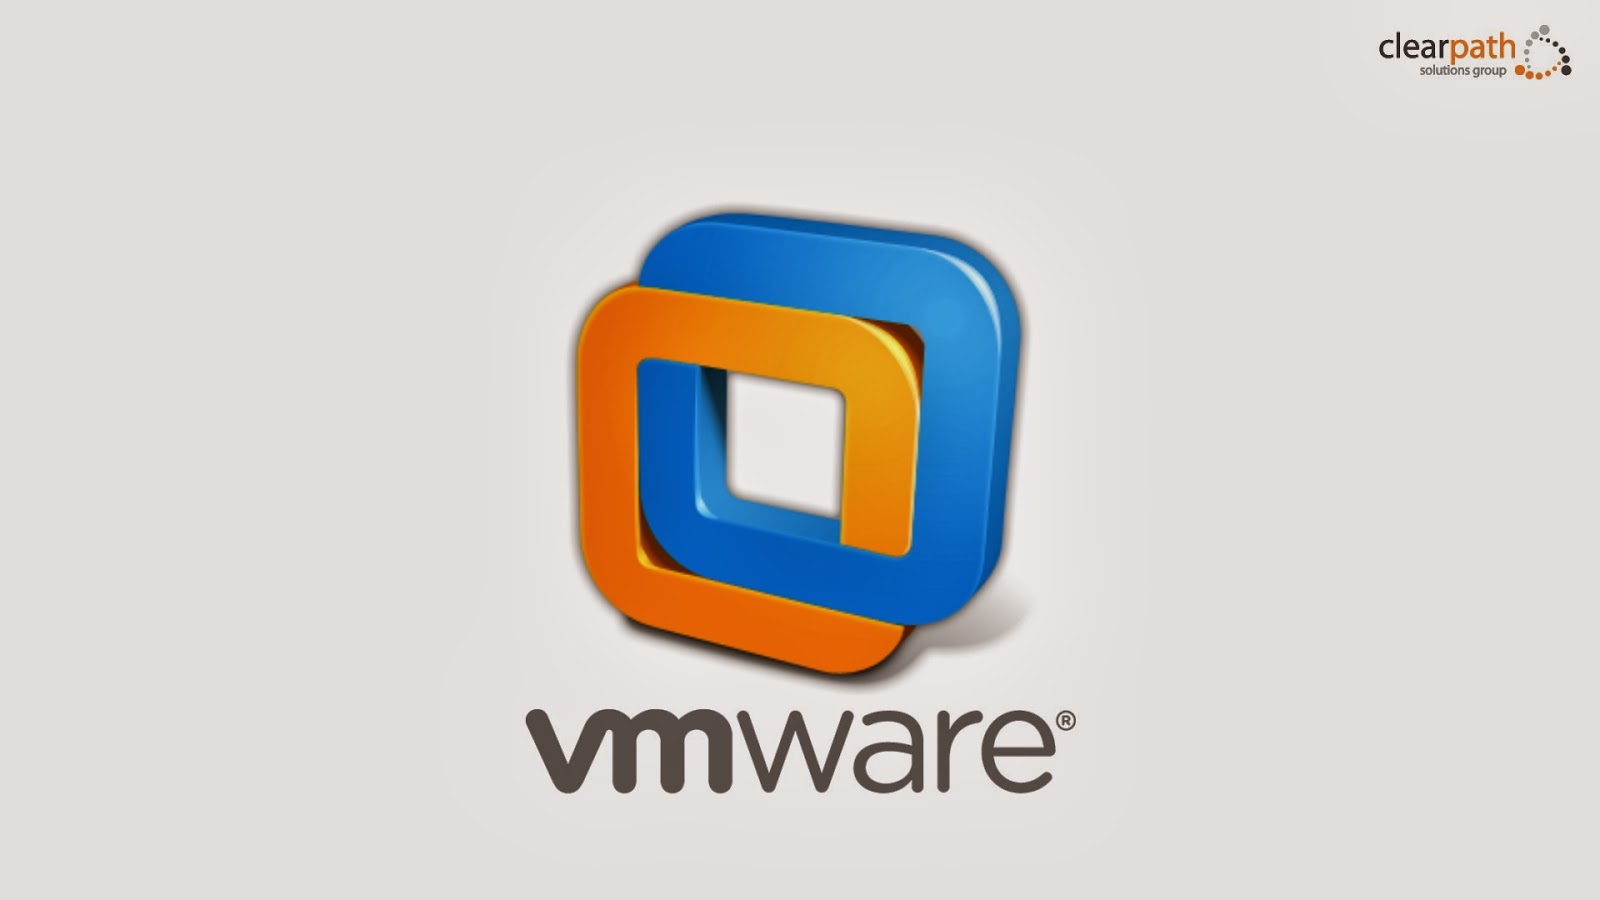 vmware workstation 10.0 7 for windows free download